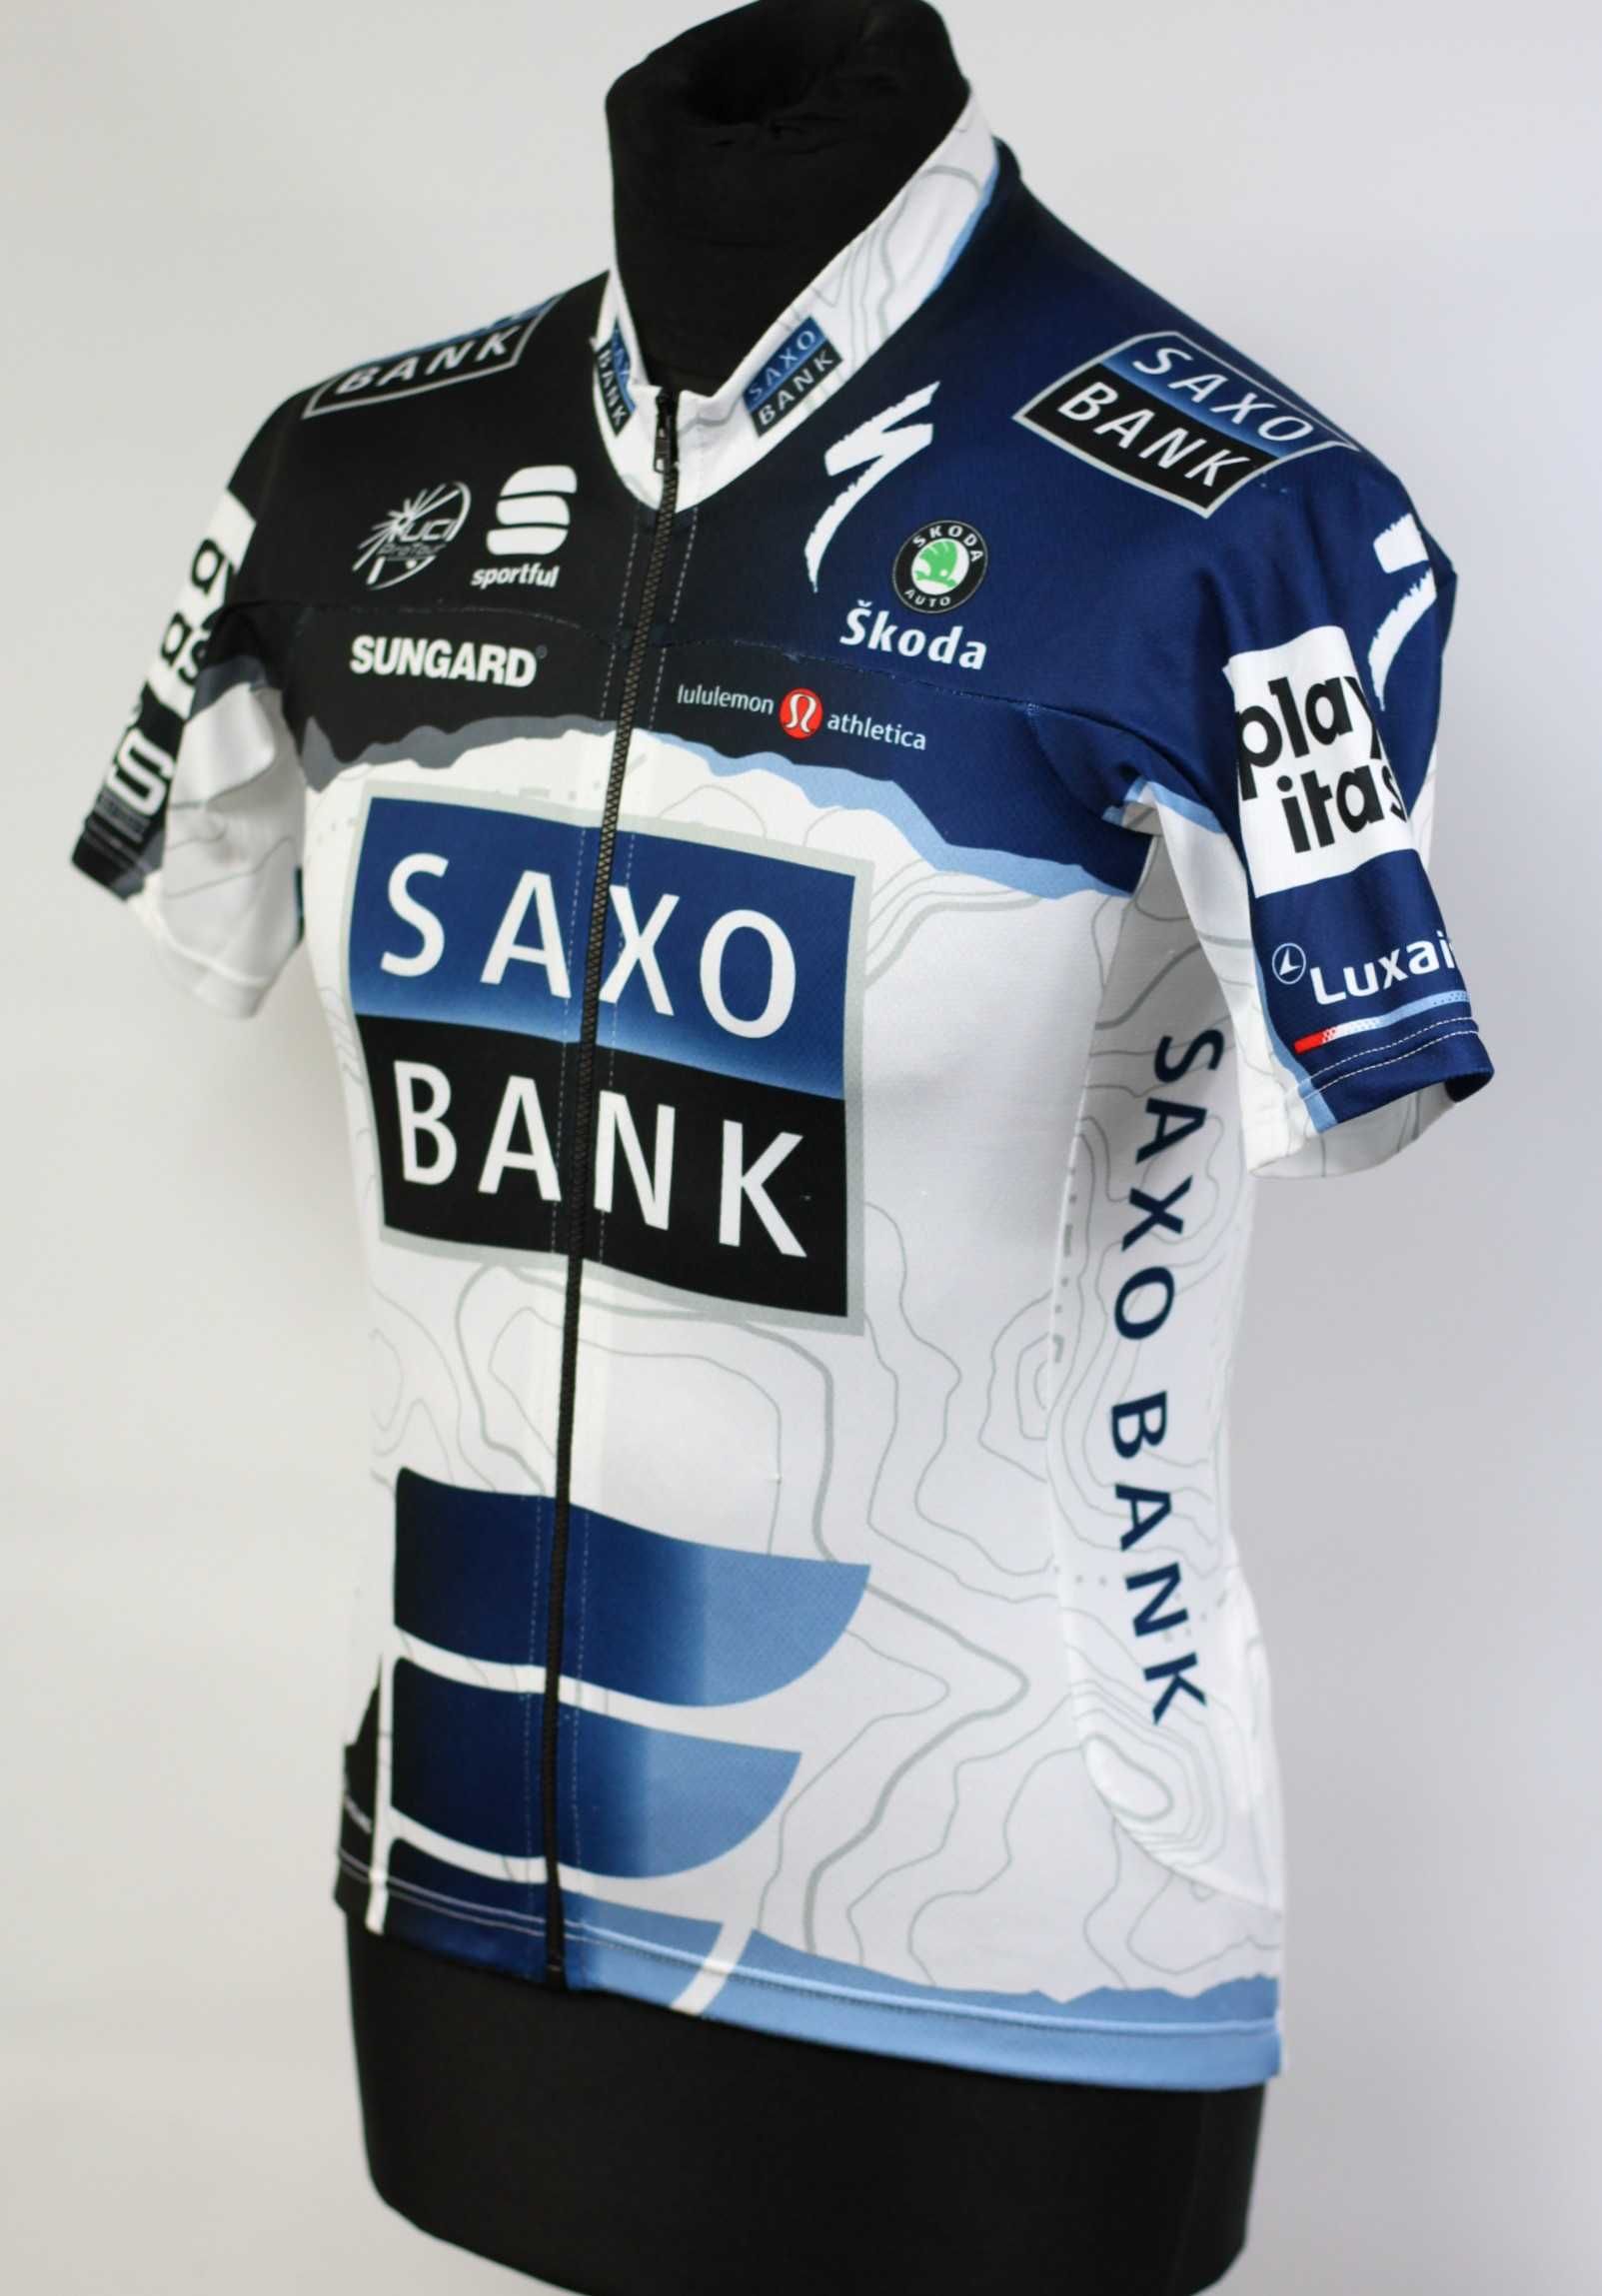 Sportful Saxo Bank męska koszulka kolarska rozmiar M